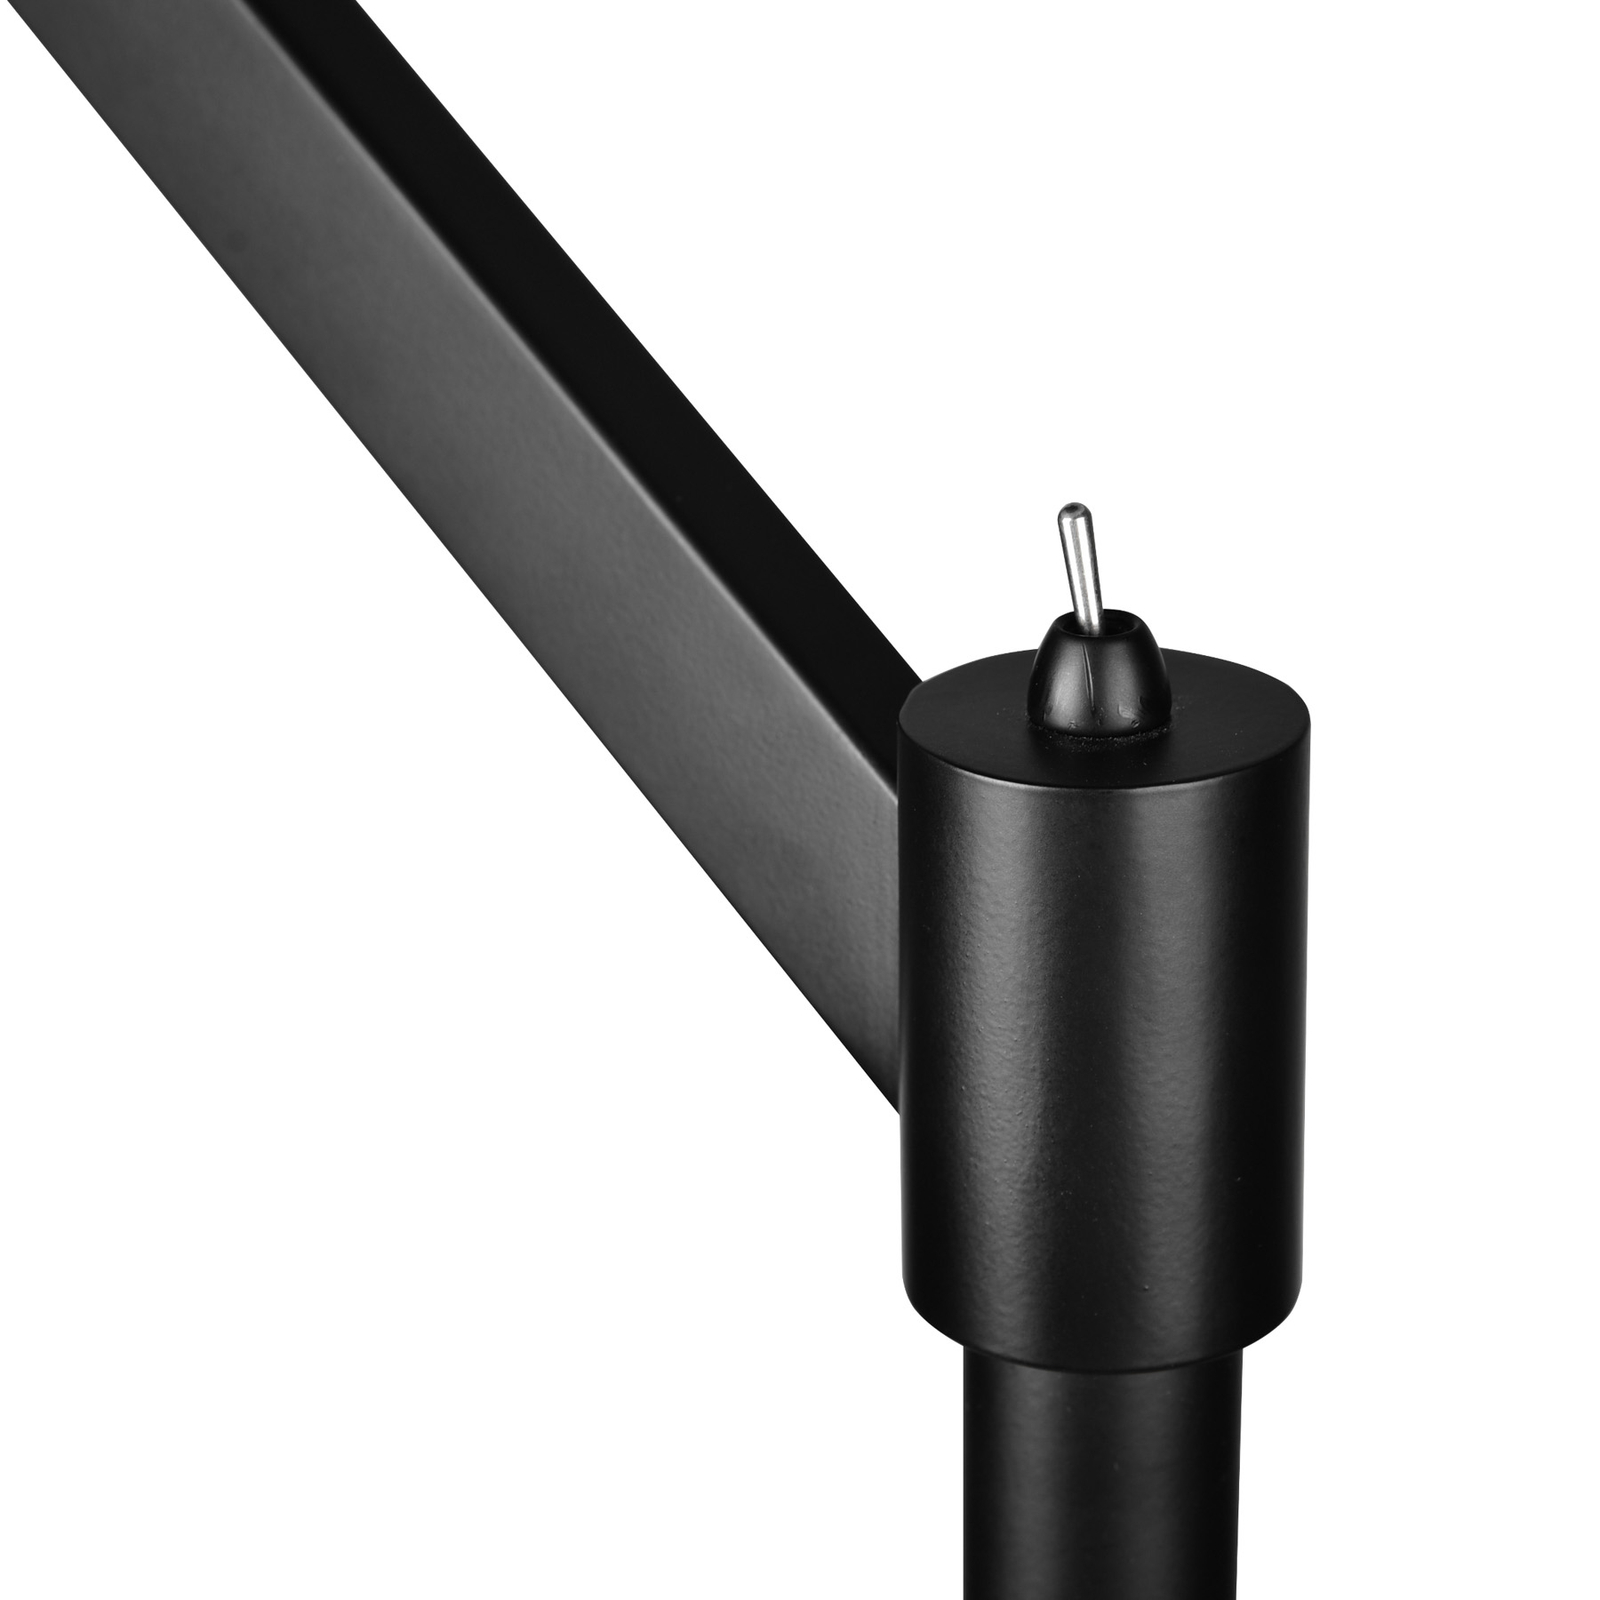 Cassio floor lamp with fabric shade, black